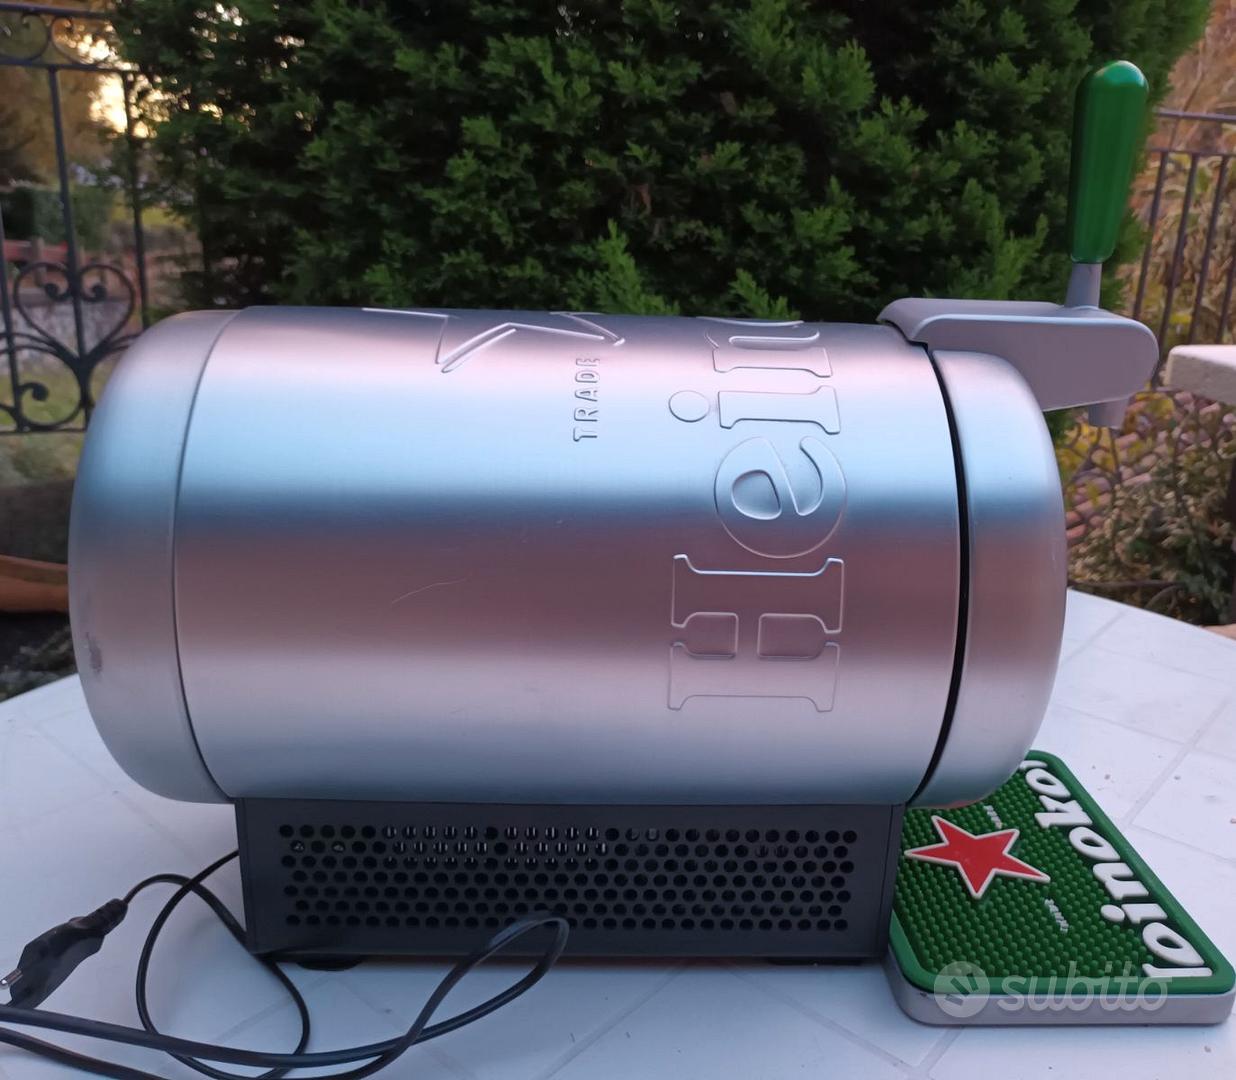 Spillatore birra Heineken - Elettrodomestici In vendita a Bergamo